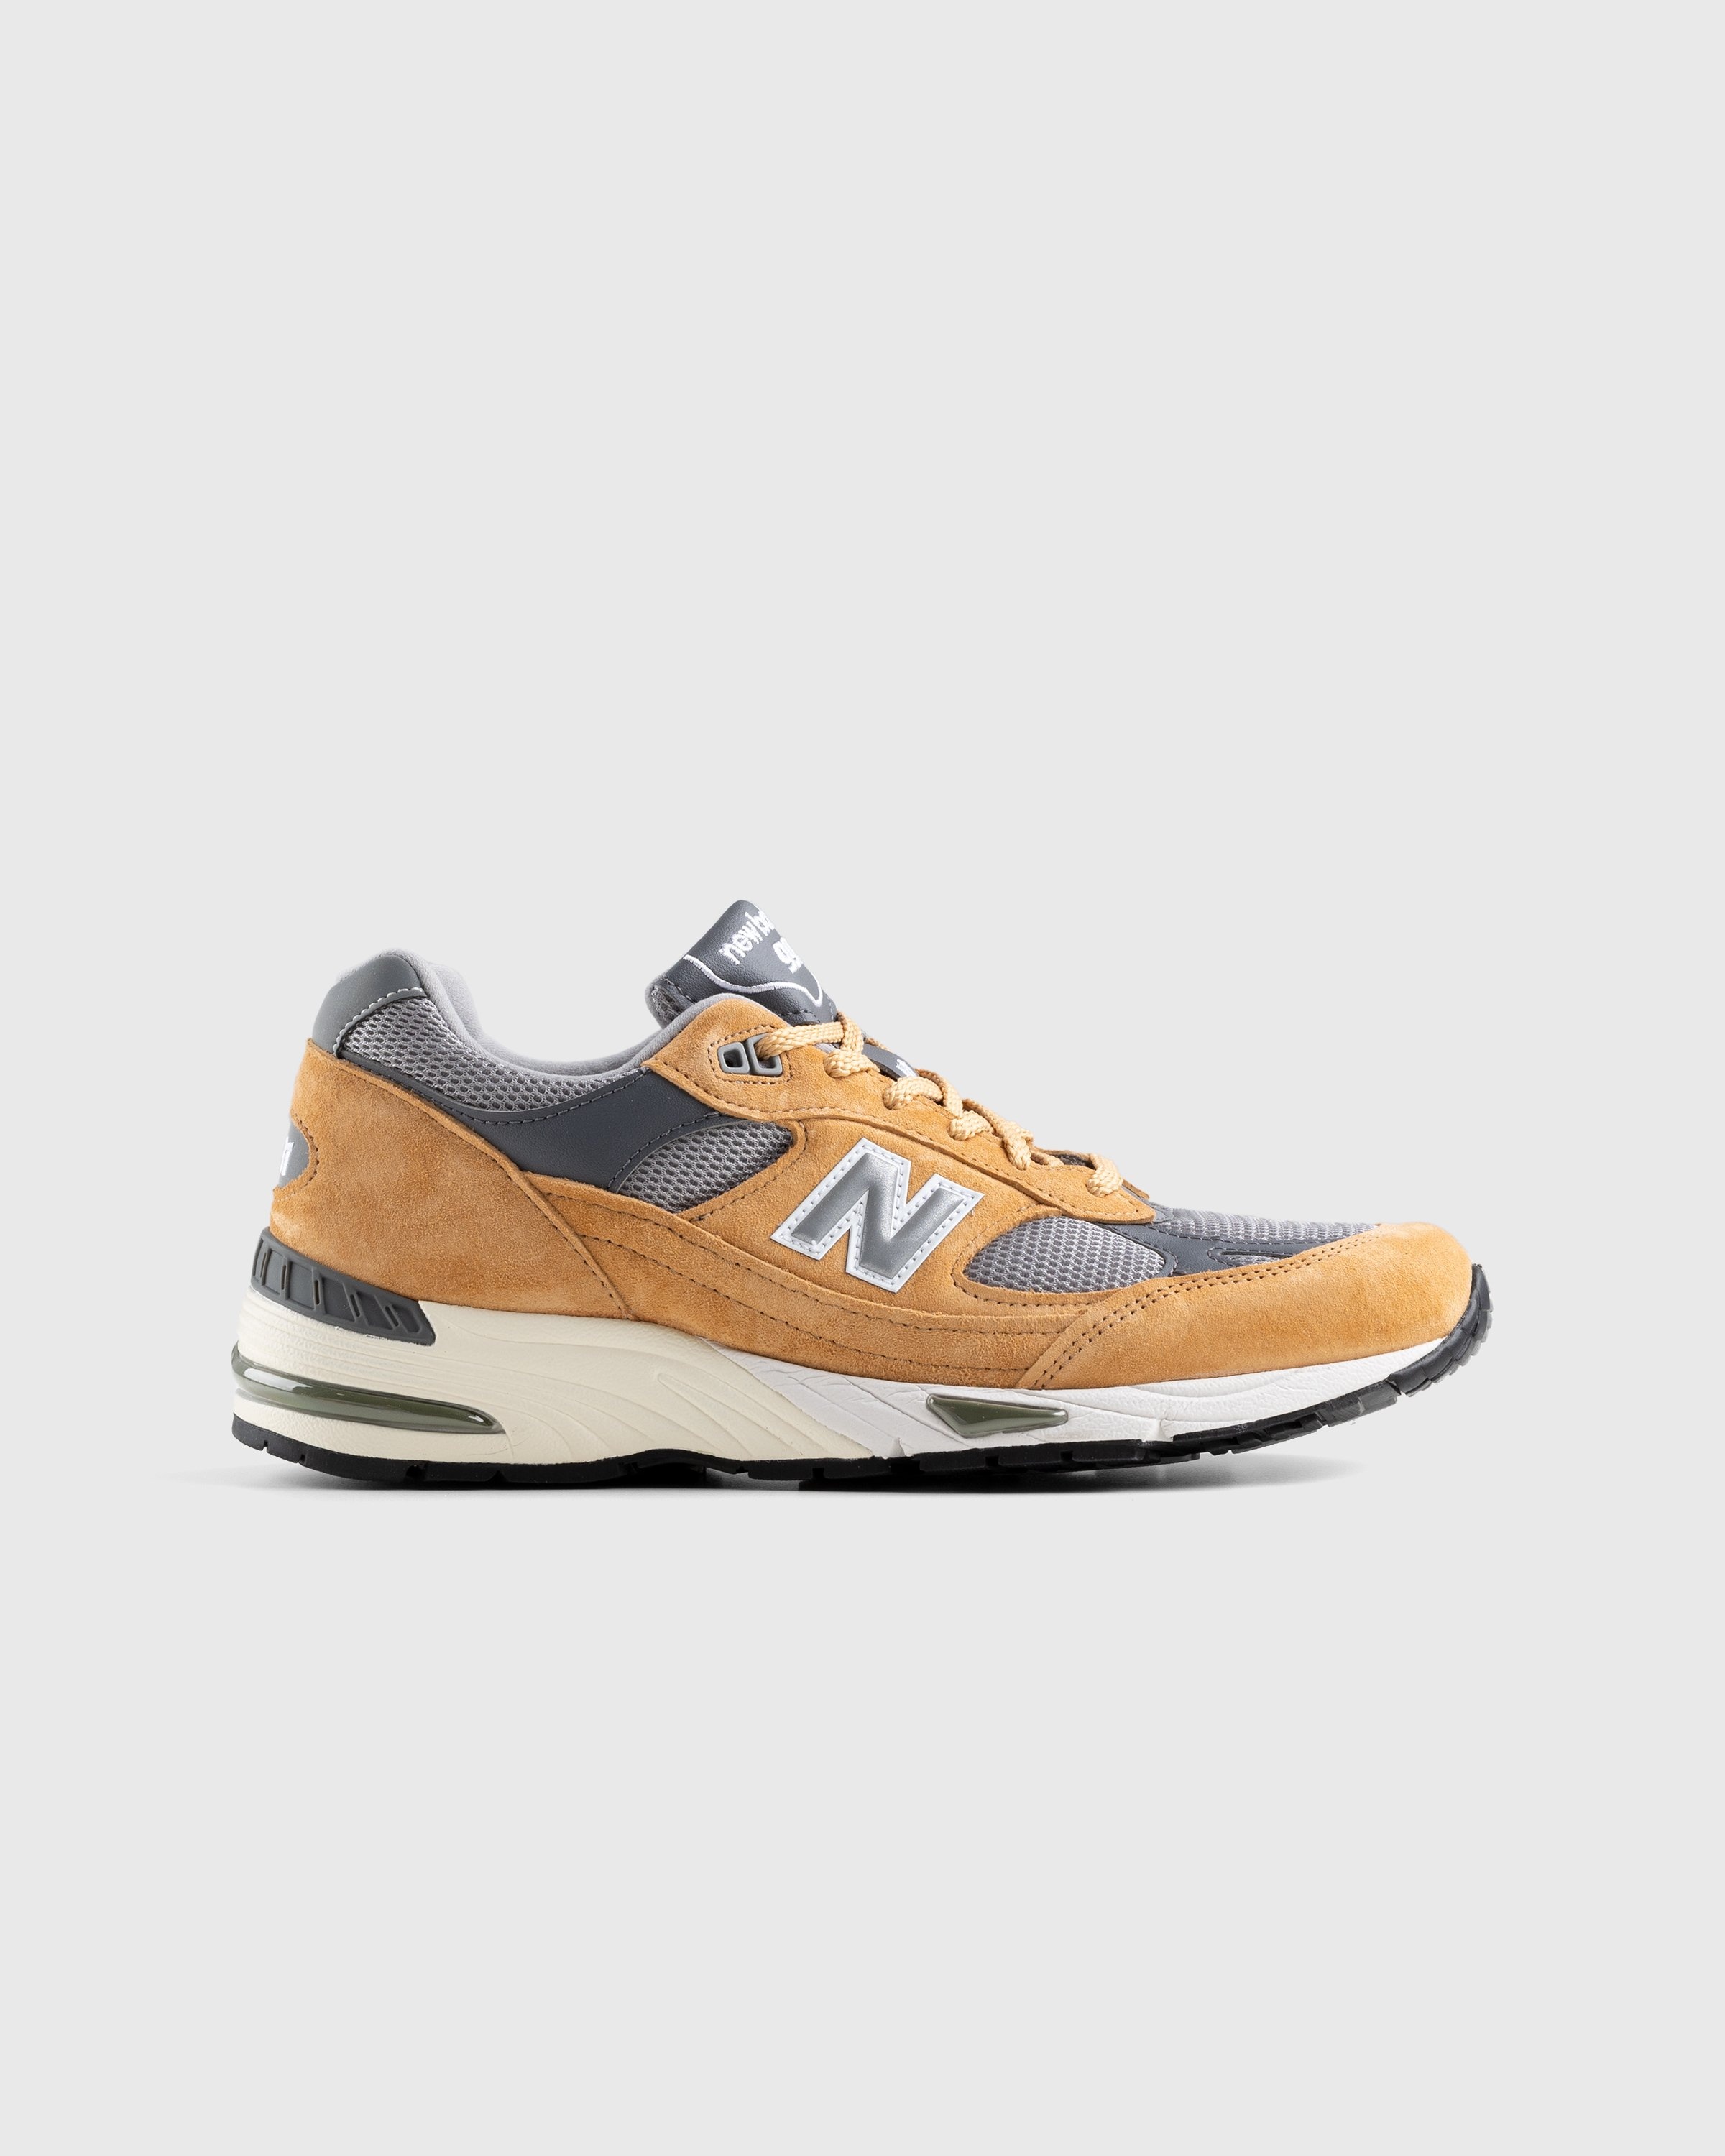 New Balance – M991TGG Tan/Grey - Sneakers - Brown - Image 1